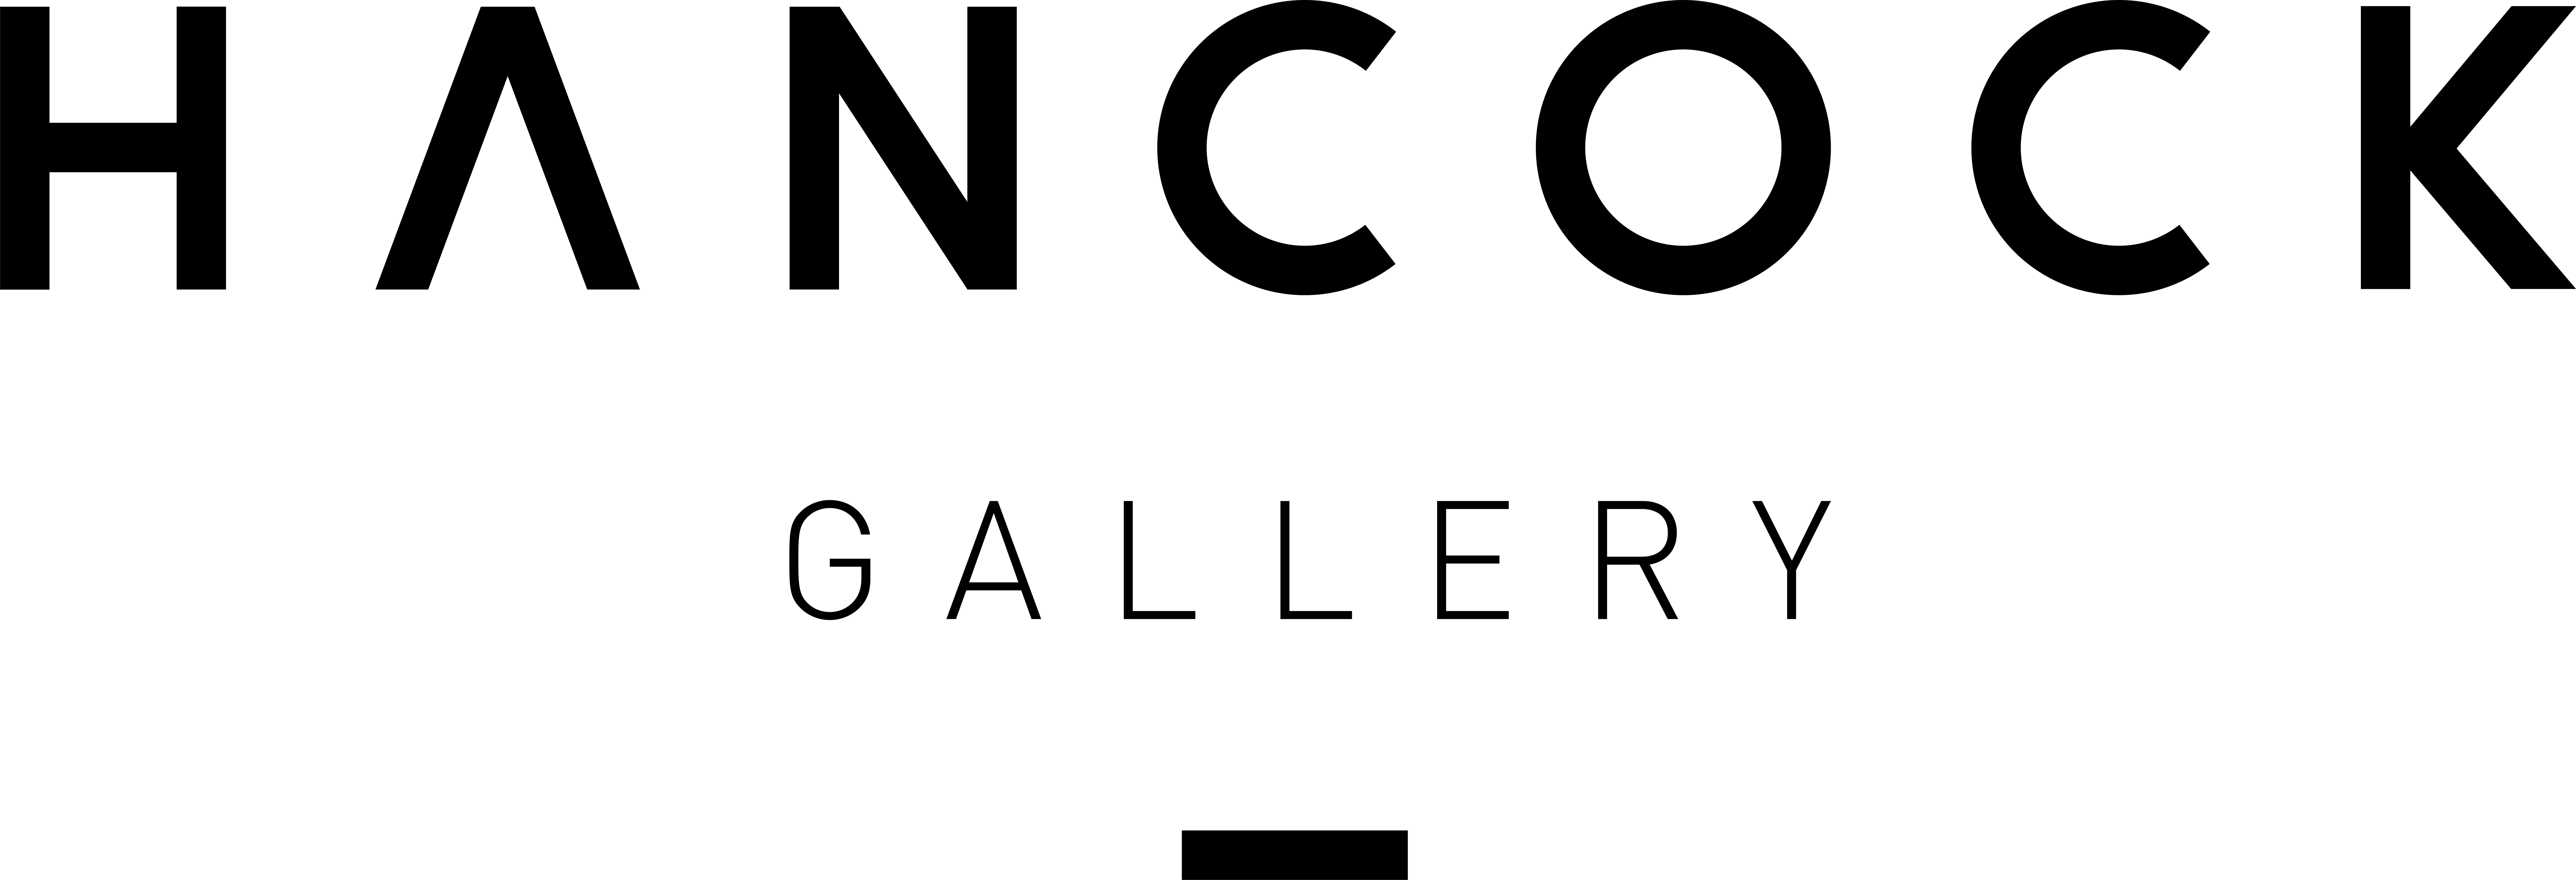 Hancock logo